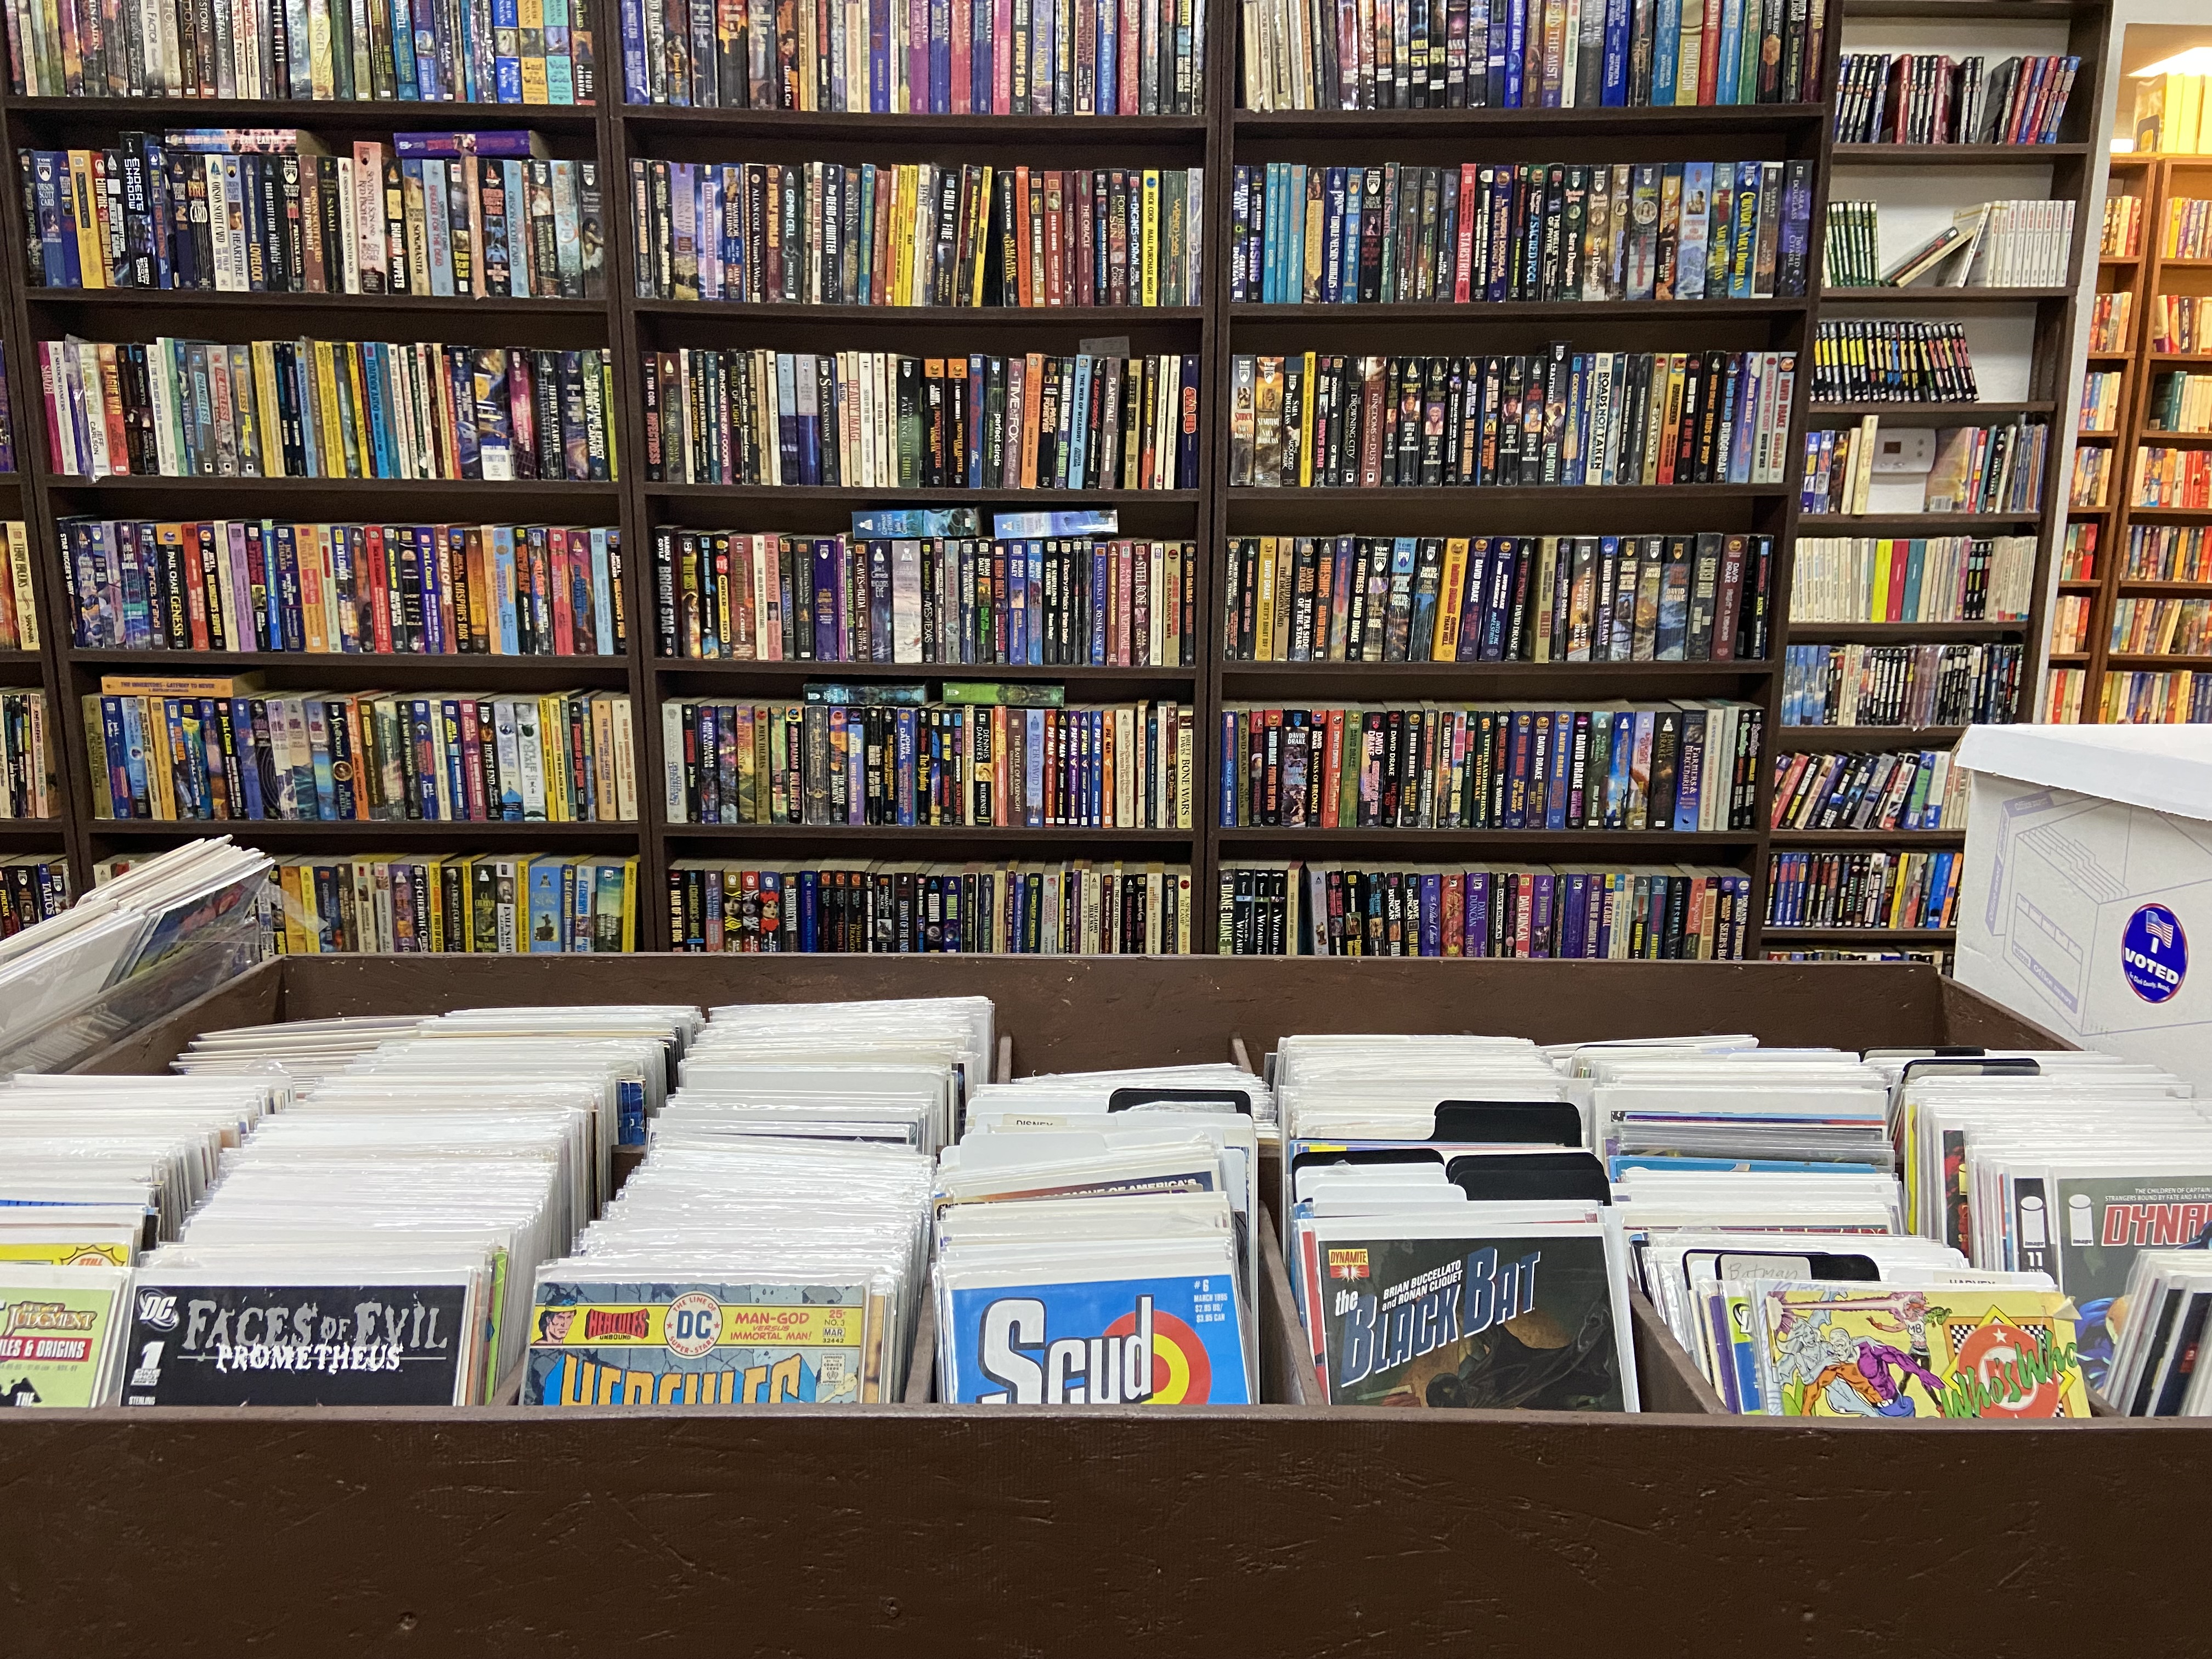 Dragon Castle Books and comics on shelves - Las Vegas bookstores